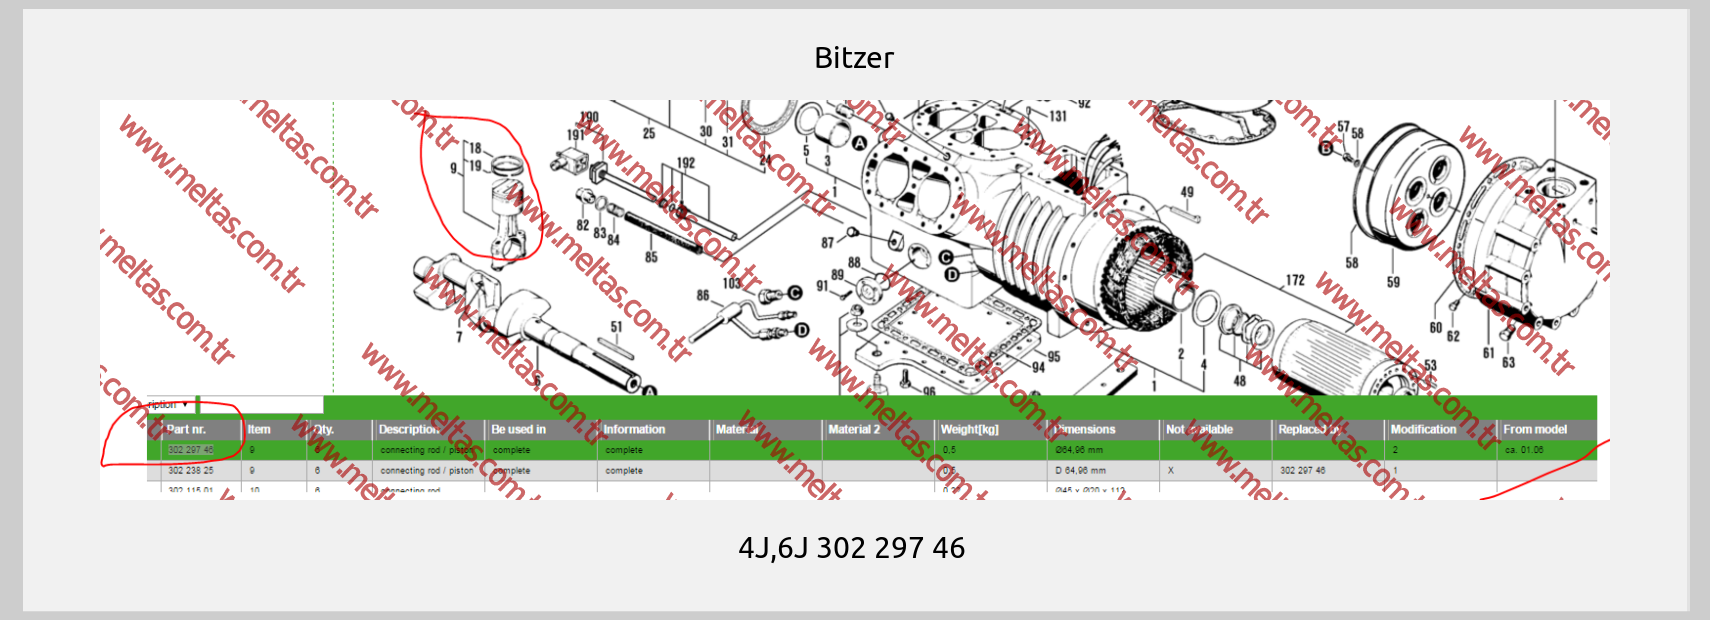 Bitzer - 4J,6J 302 297 46 